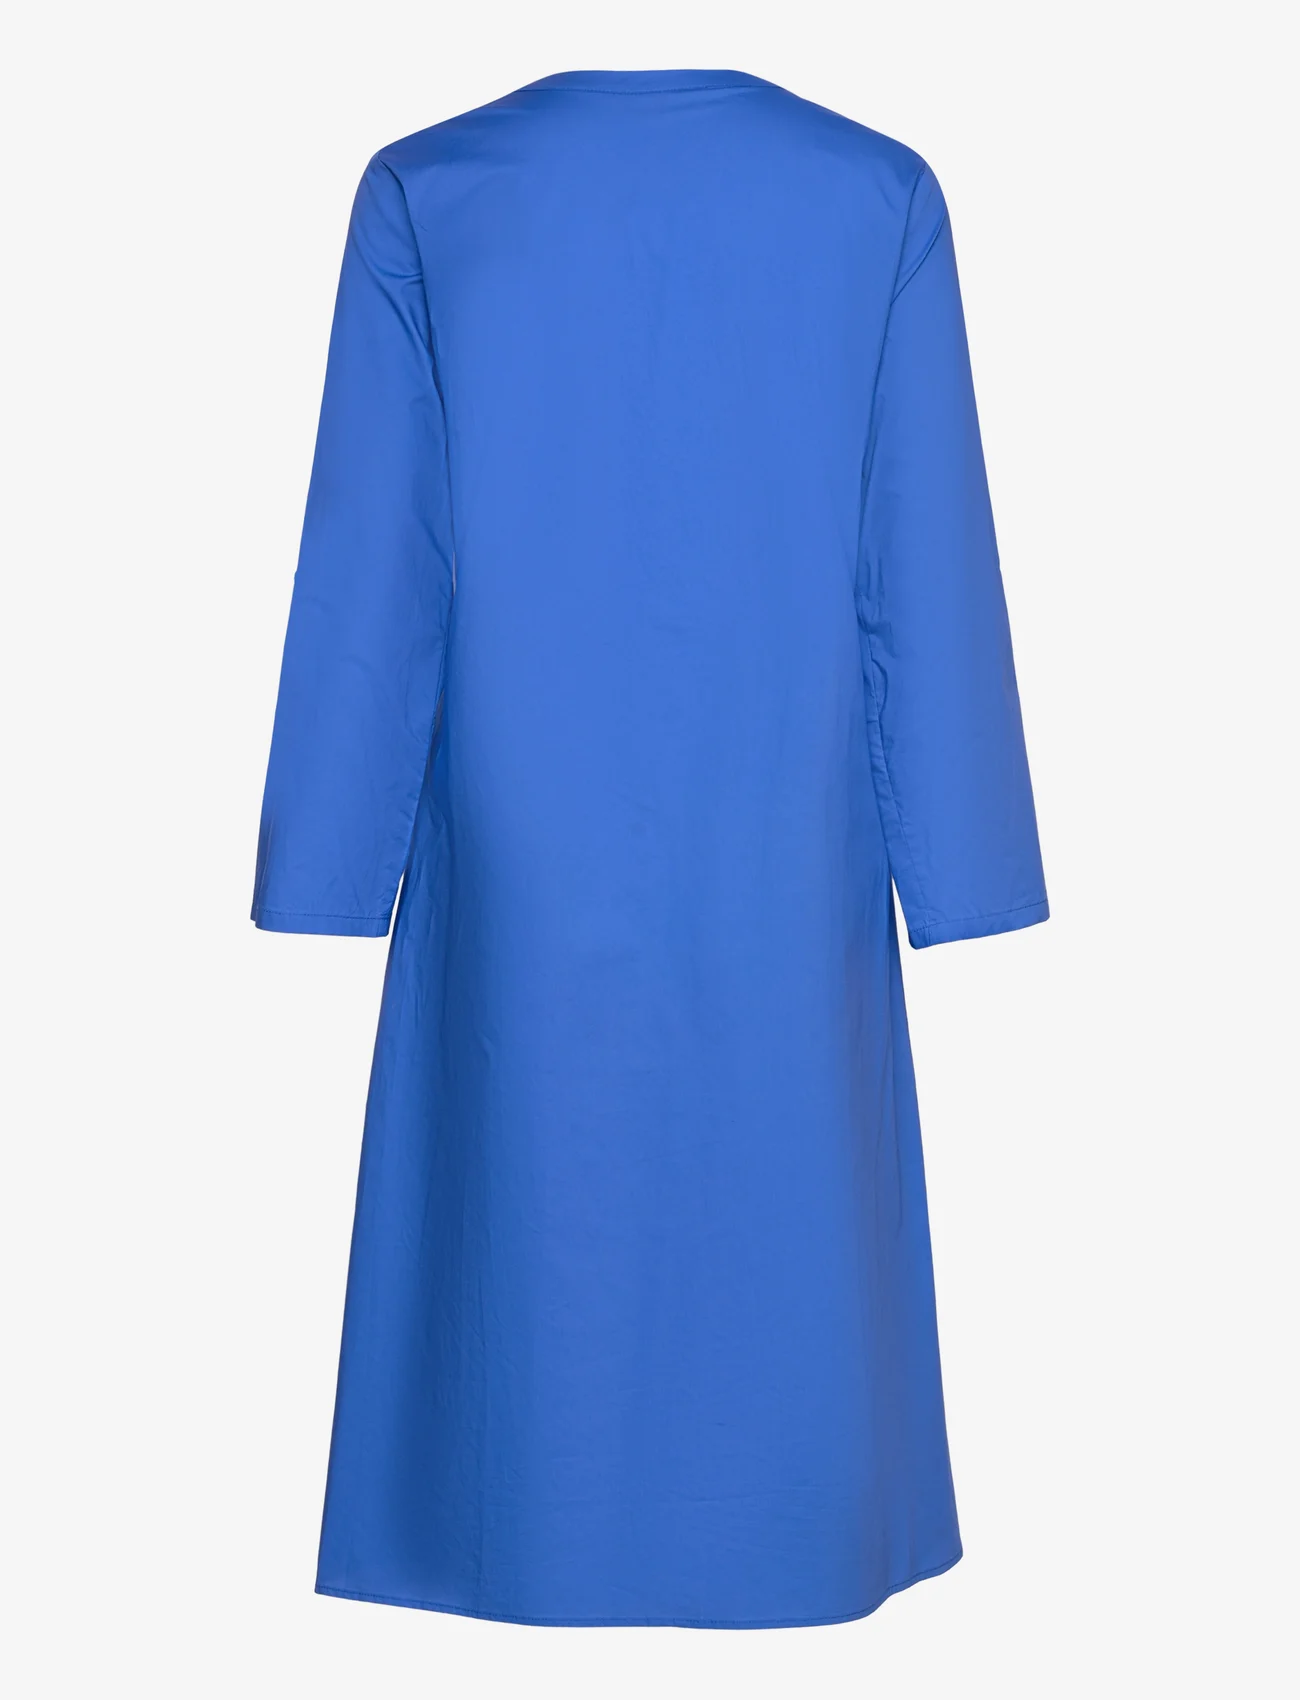 FREE/QUENT - FQMALAY-DRESS - skjortklänningar - nebulas blue - 1